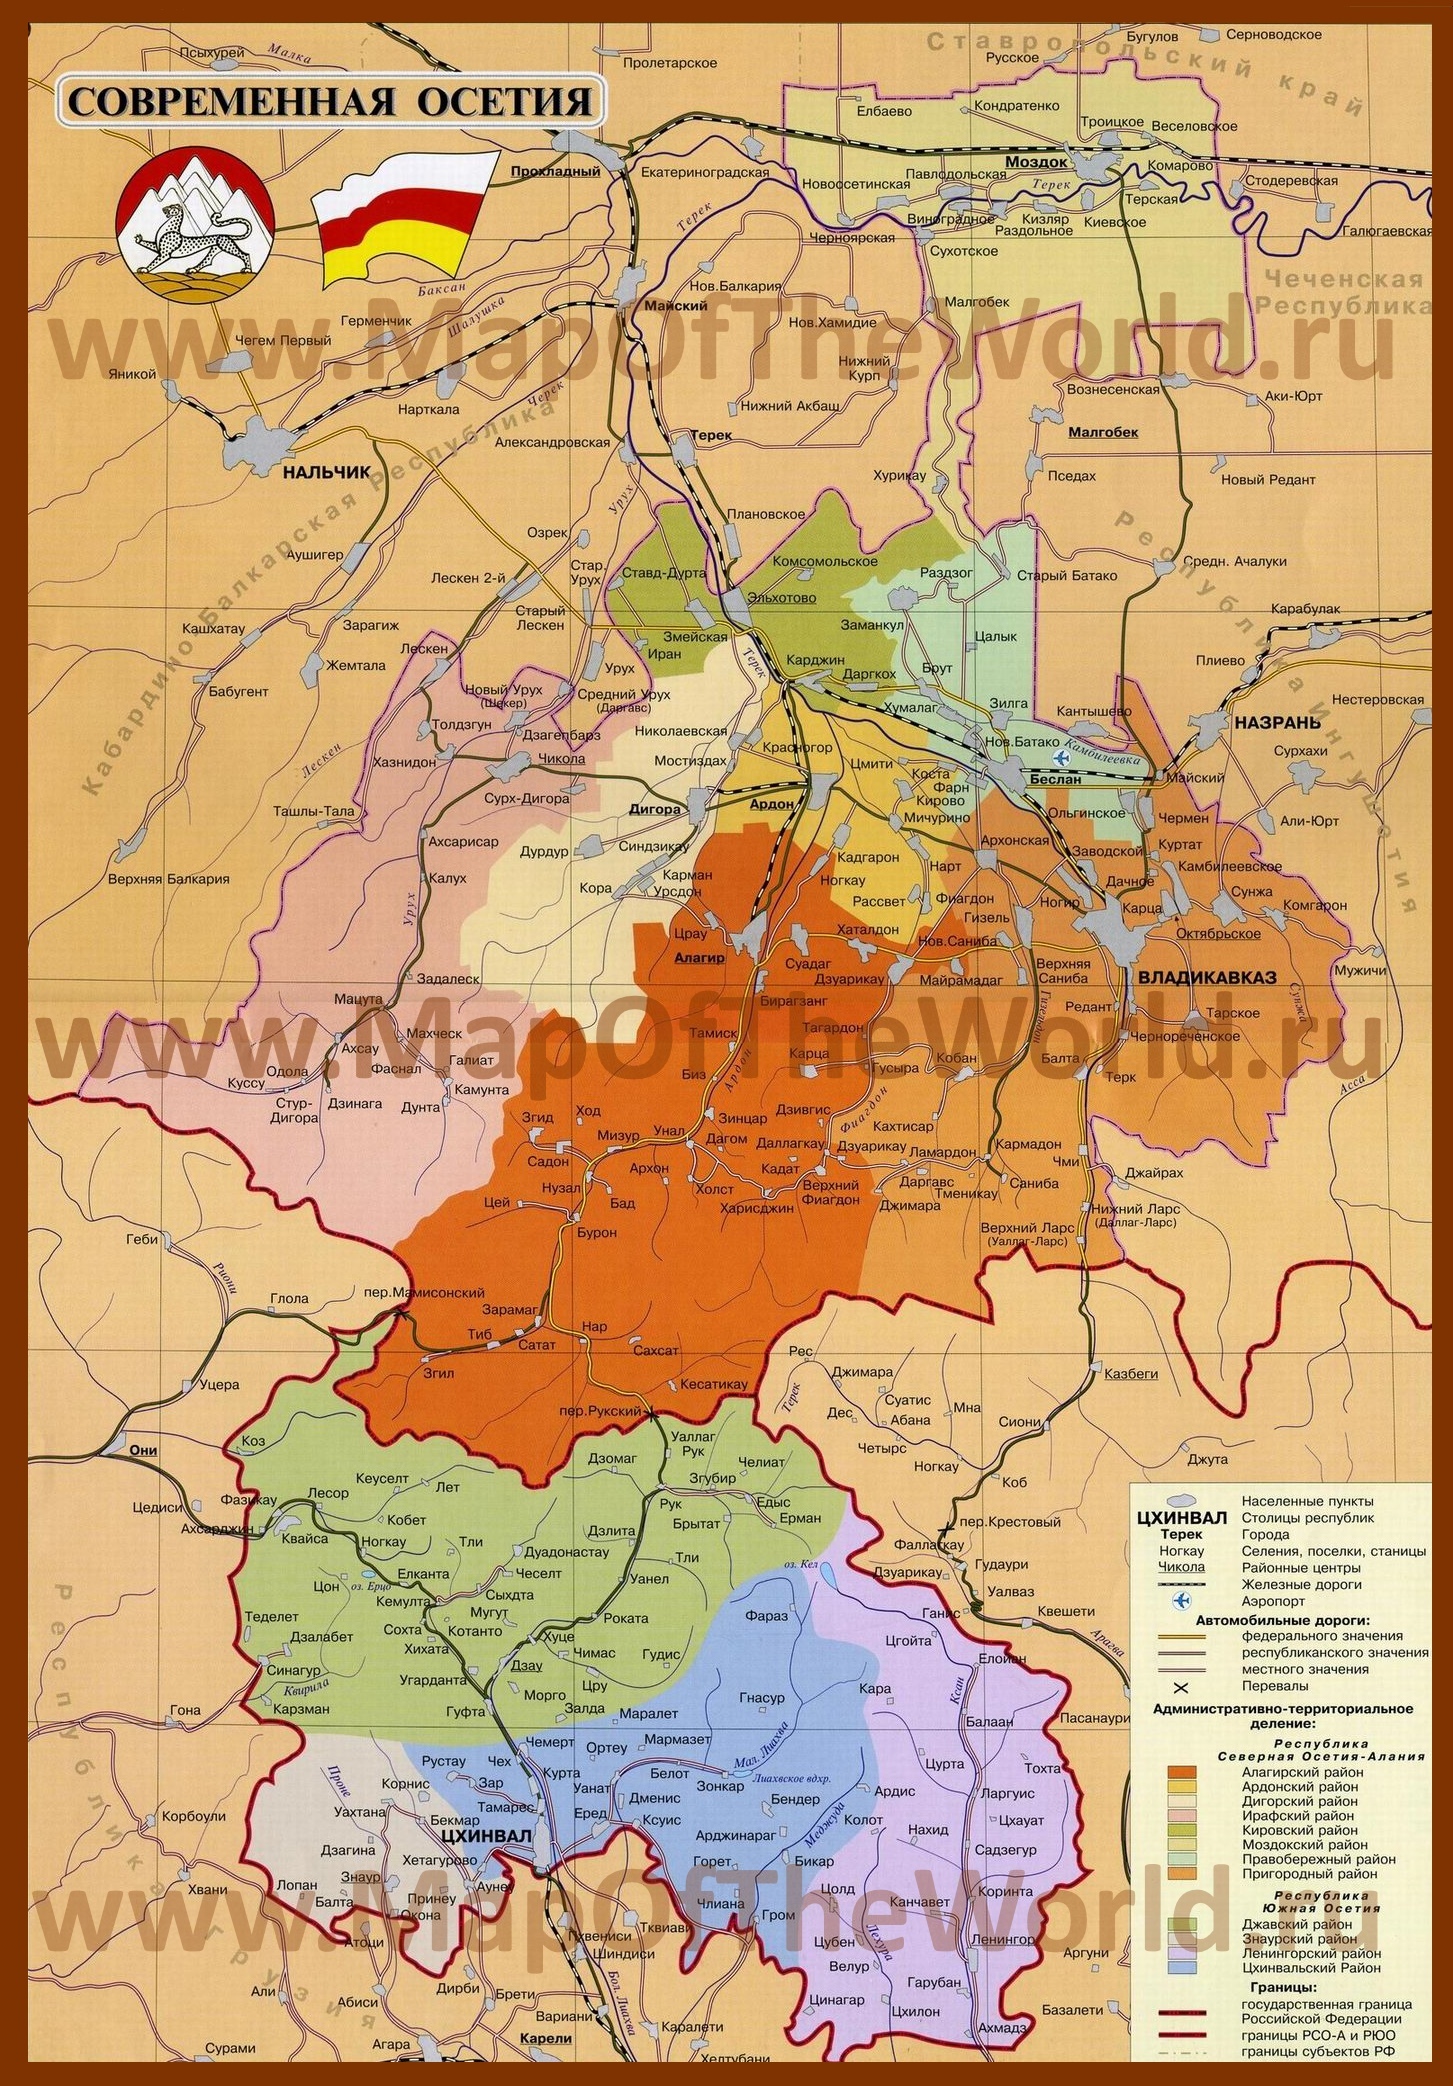 Показать на карте южную осетию. Северная Осетия на карте. Северная Осетия-Алания на карте. Карта Республики Северная Осетия Алания. Южная Осетия и Северная Осетия на карте.